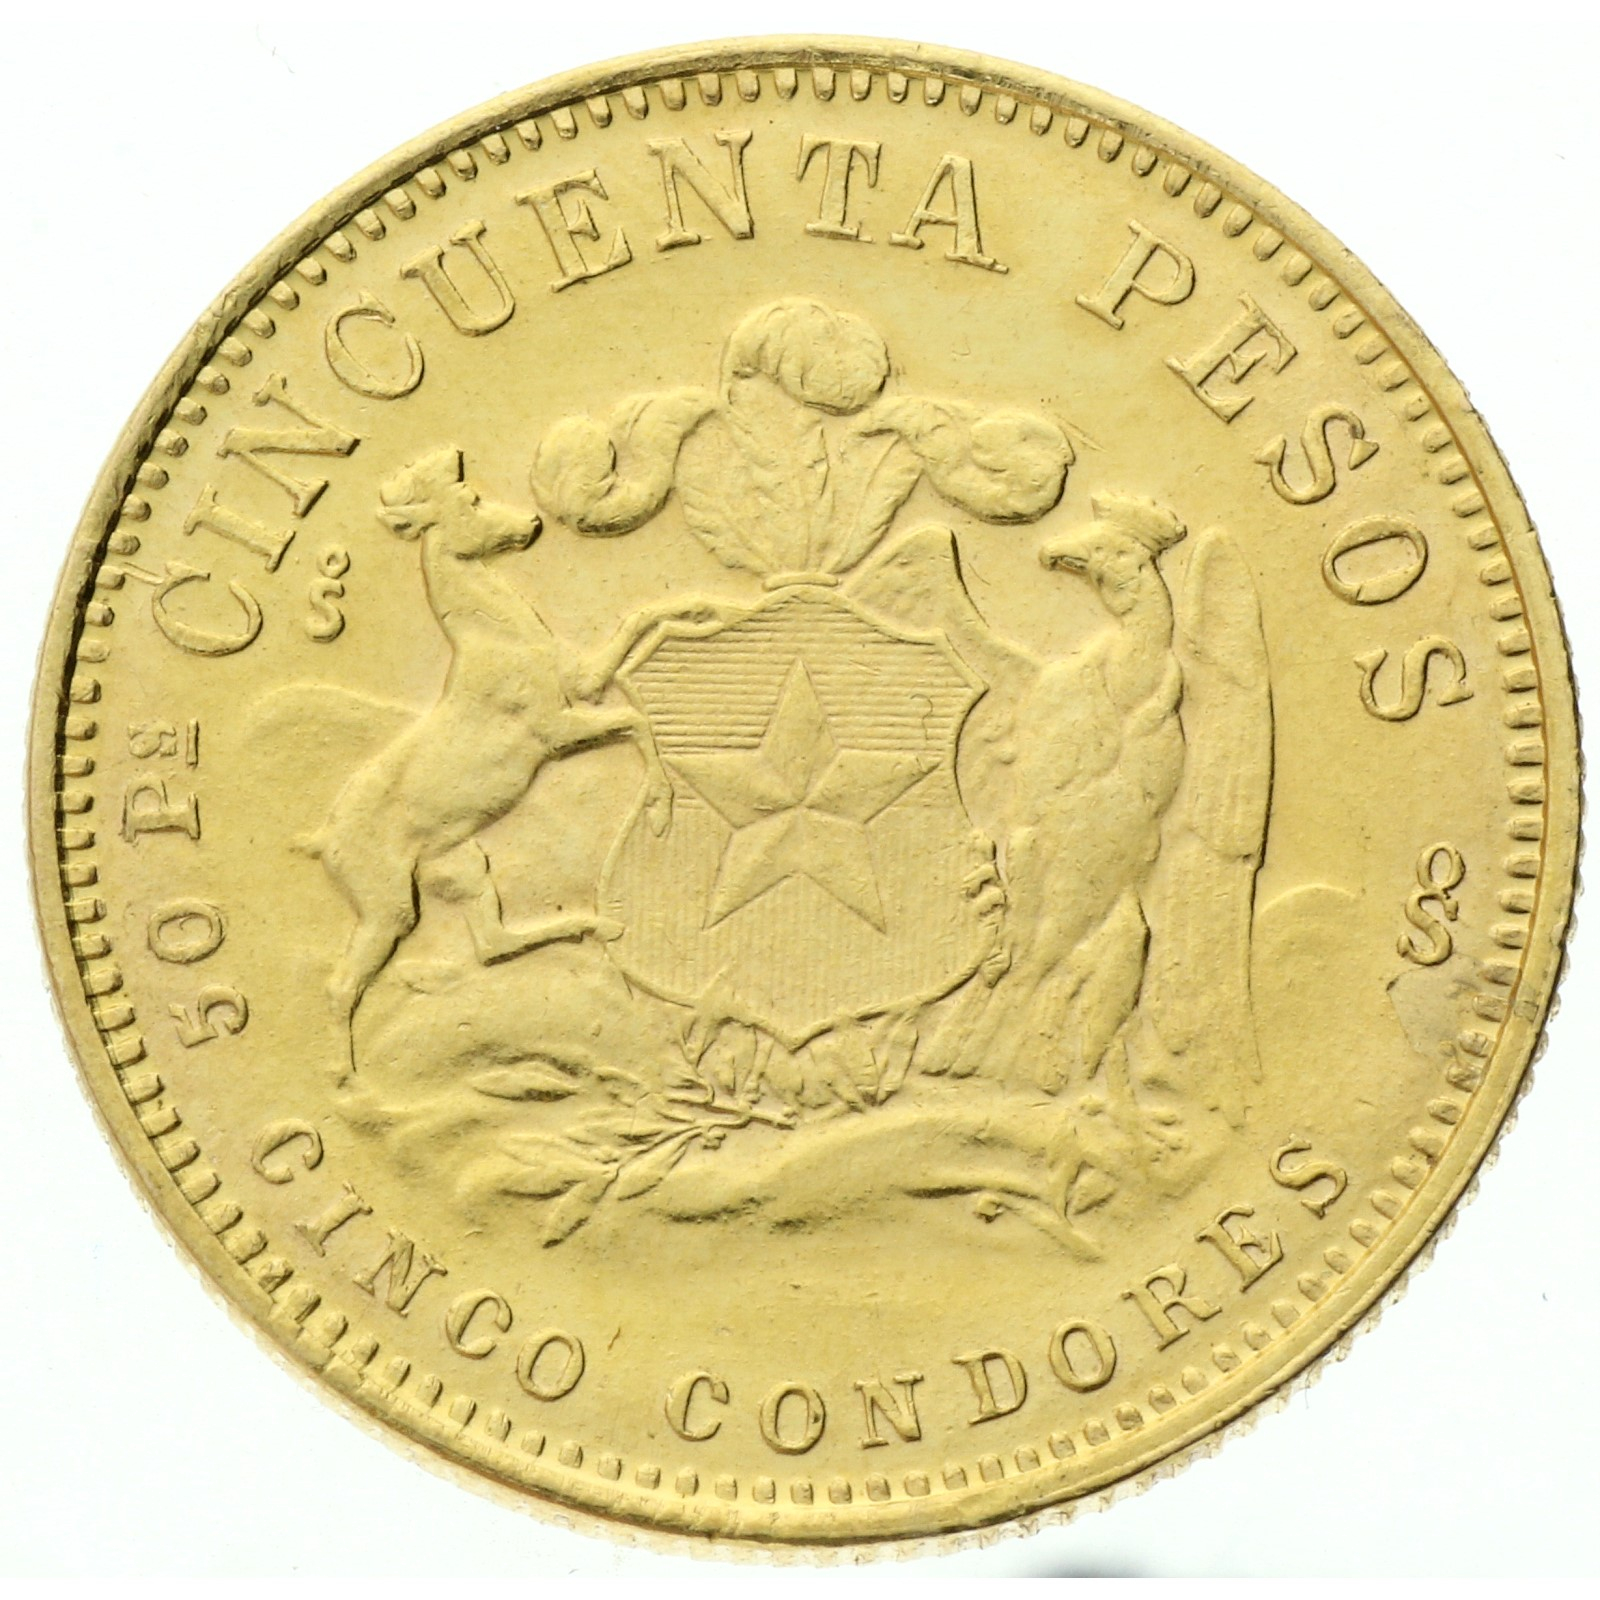 Chile - 50 pesos - 1974 